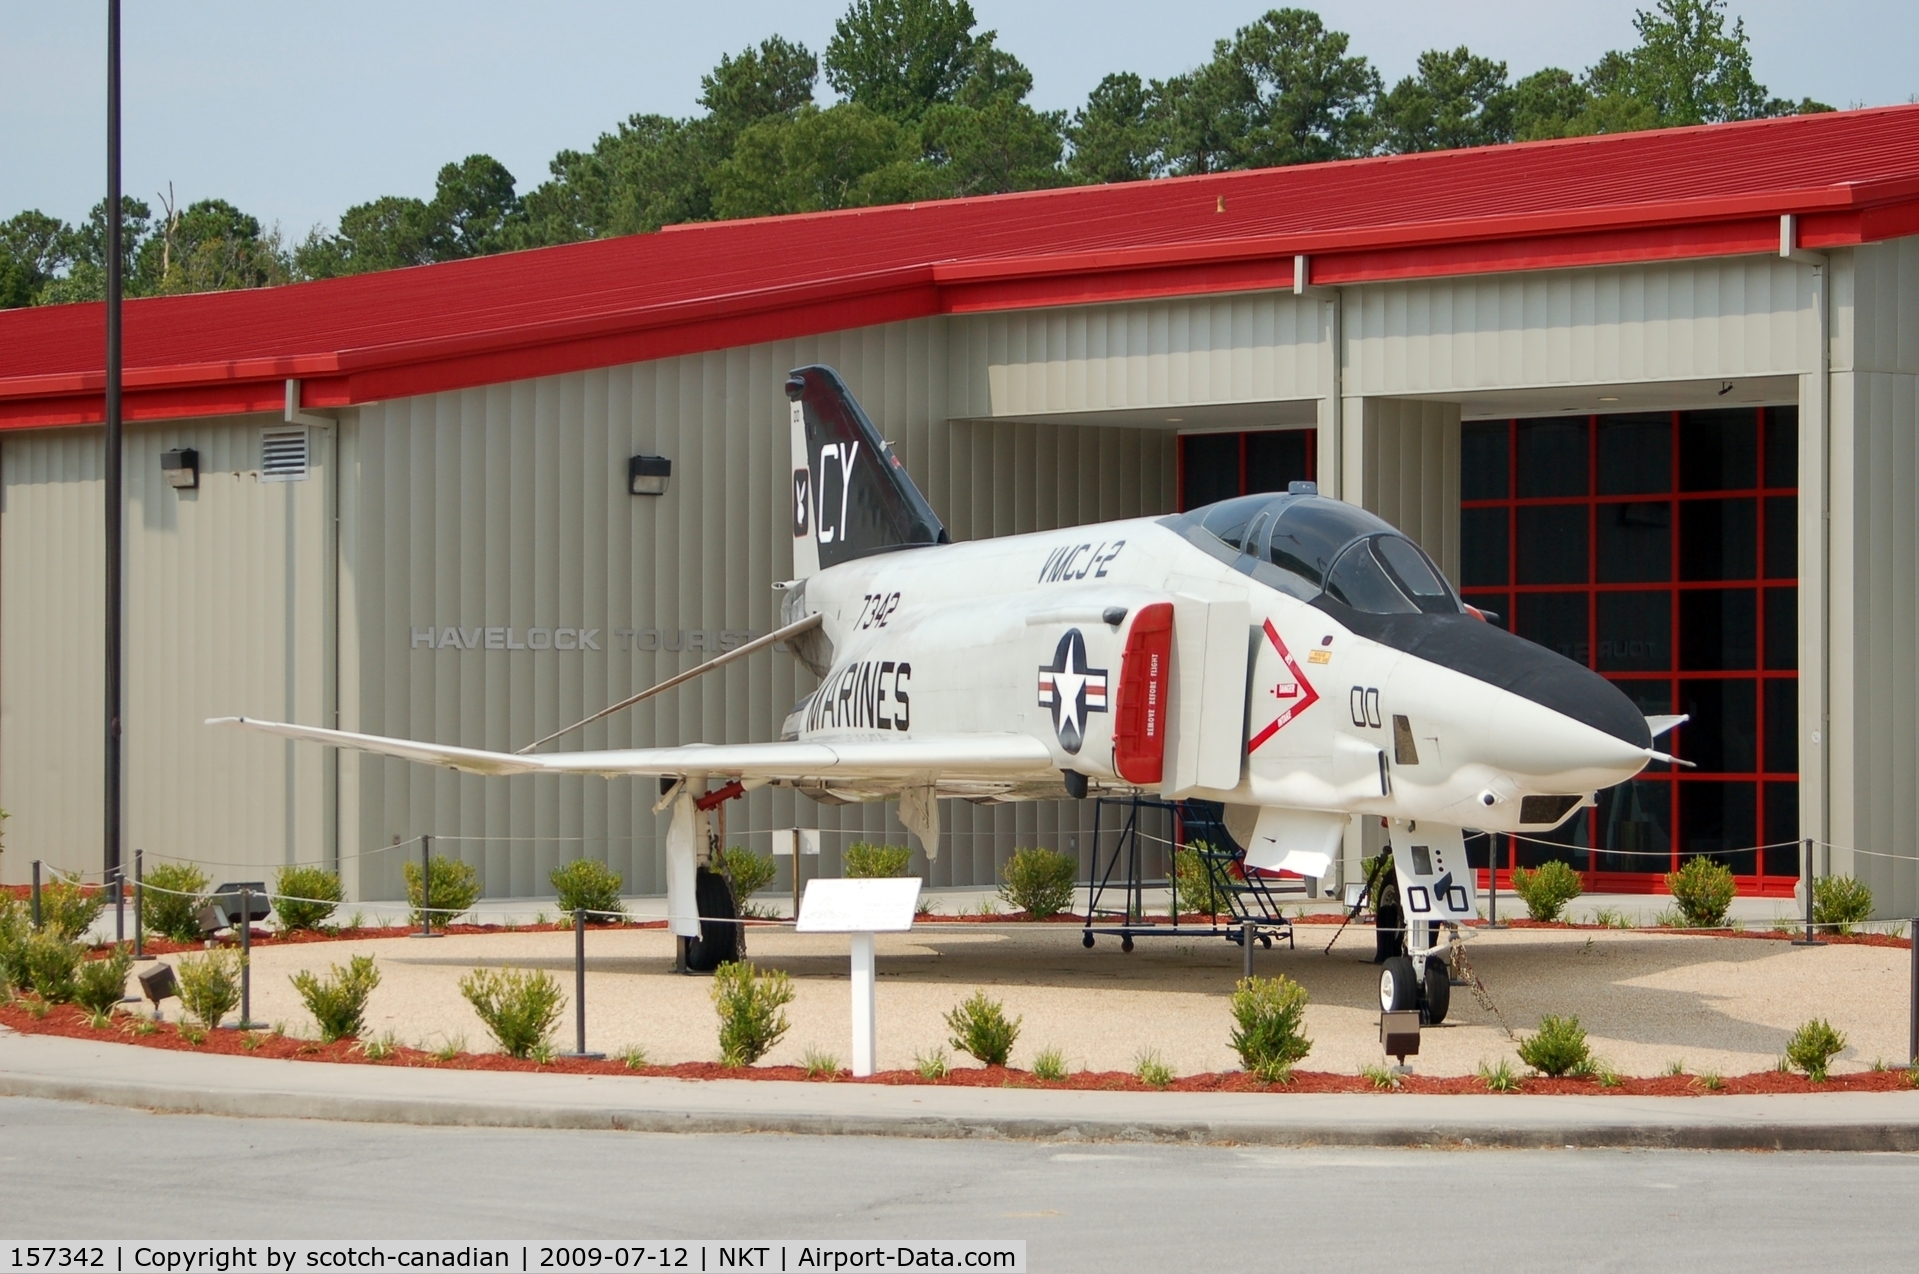 157342, McDonnell RF-4B Phantom II C/N 3689, McDonnell RF-4B Phantom II on display at the Havelock Tourist & Event Center, Havelock, NC